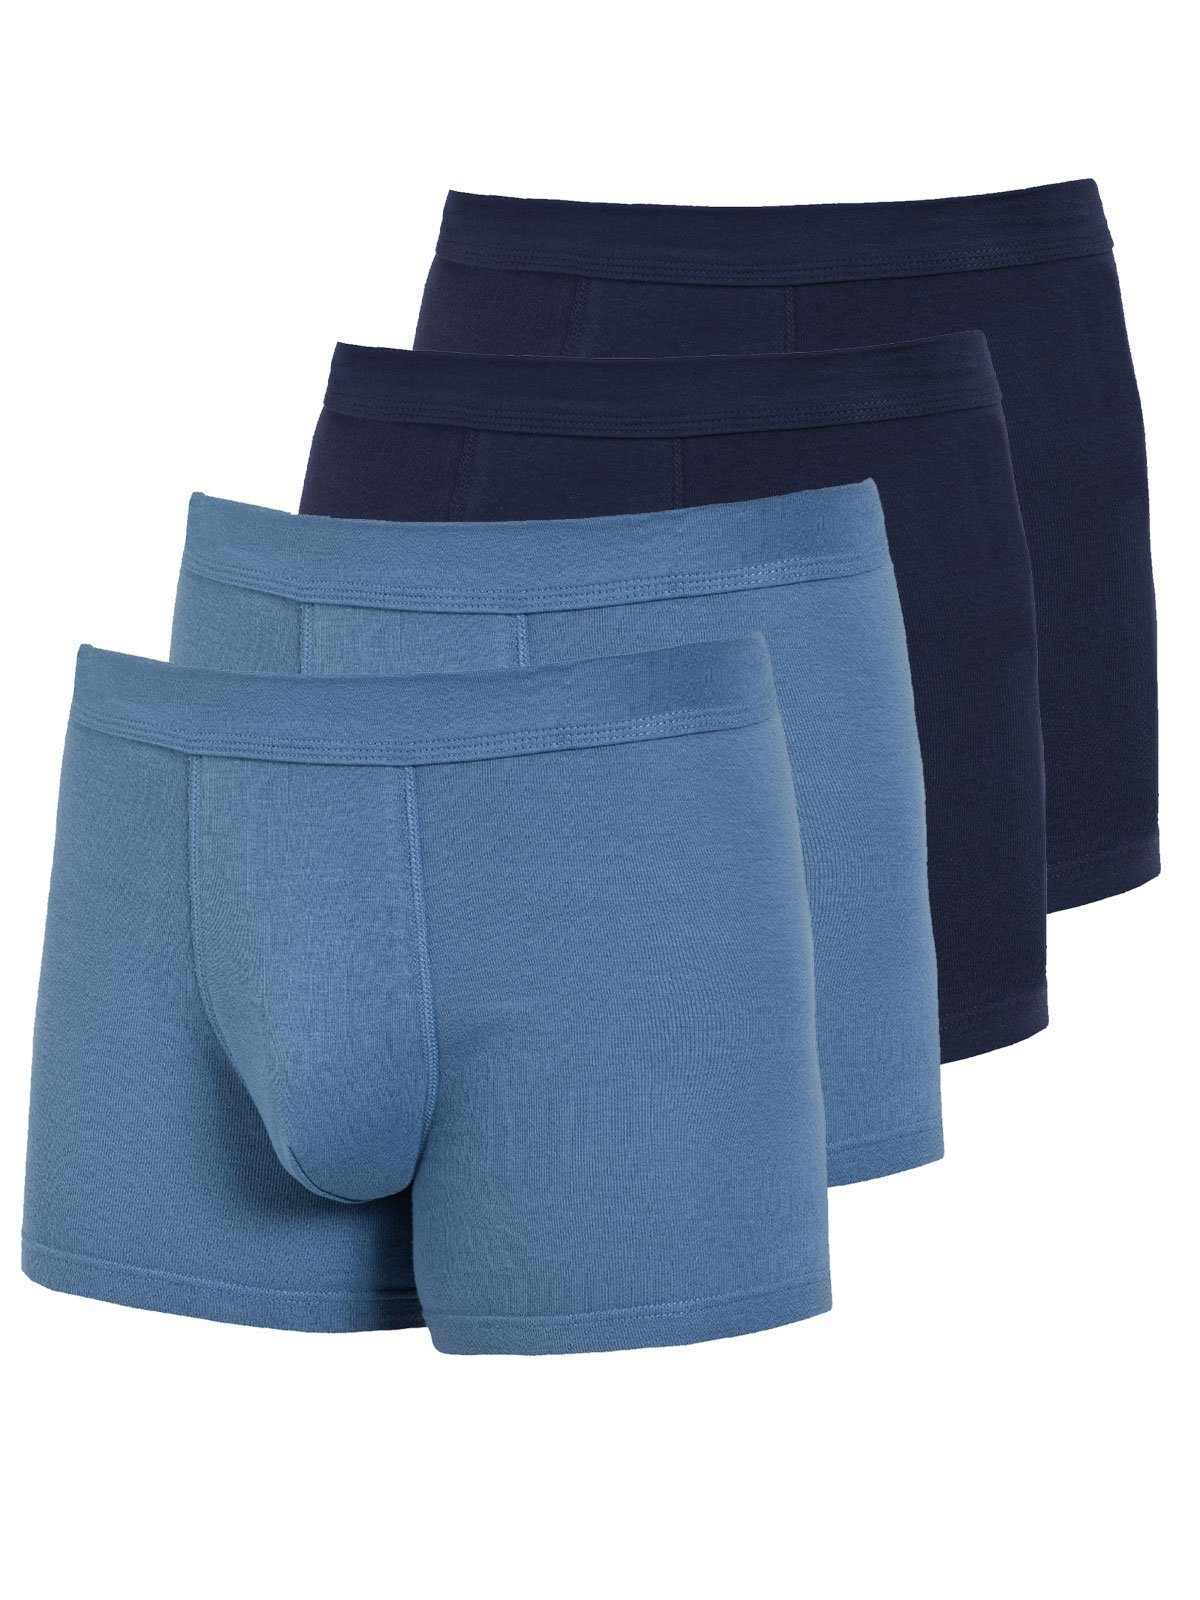 KUMPF Retro Pants (Spar-Set, Sparpack 4er Herren - Pants navy Bio atlantis Cotton 4-St)